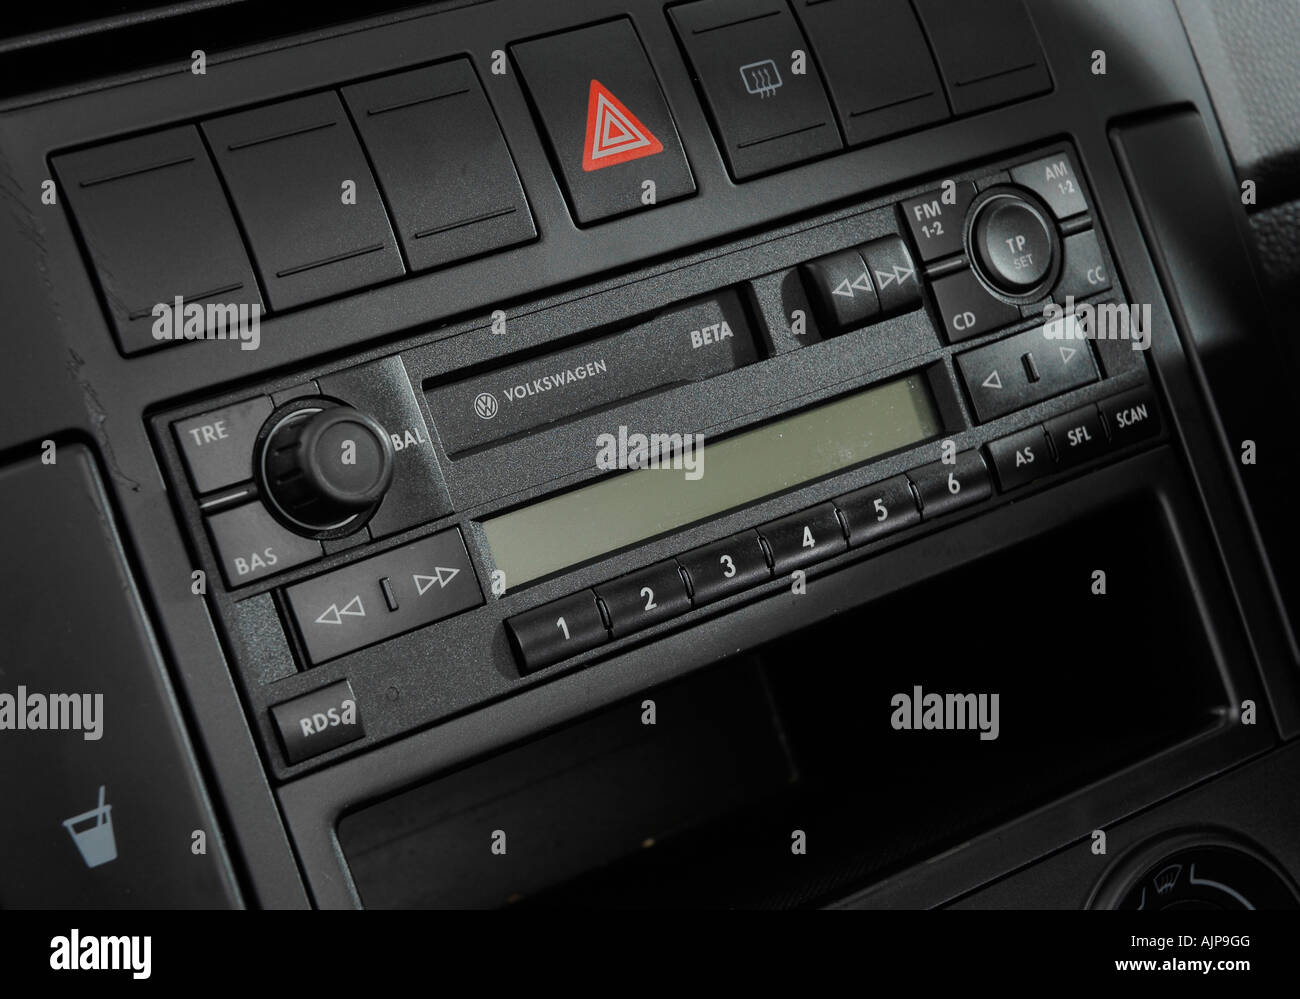 2003-Volkswagen Polo sdi-radio Stockfotografie - Alamy